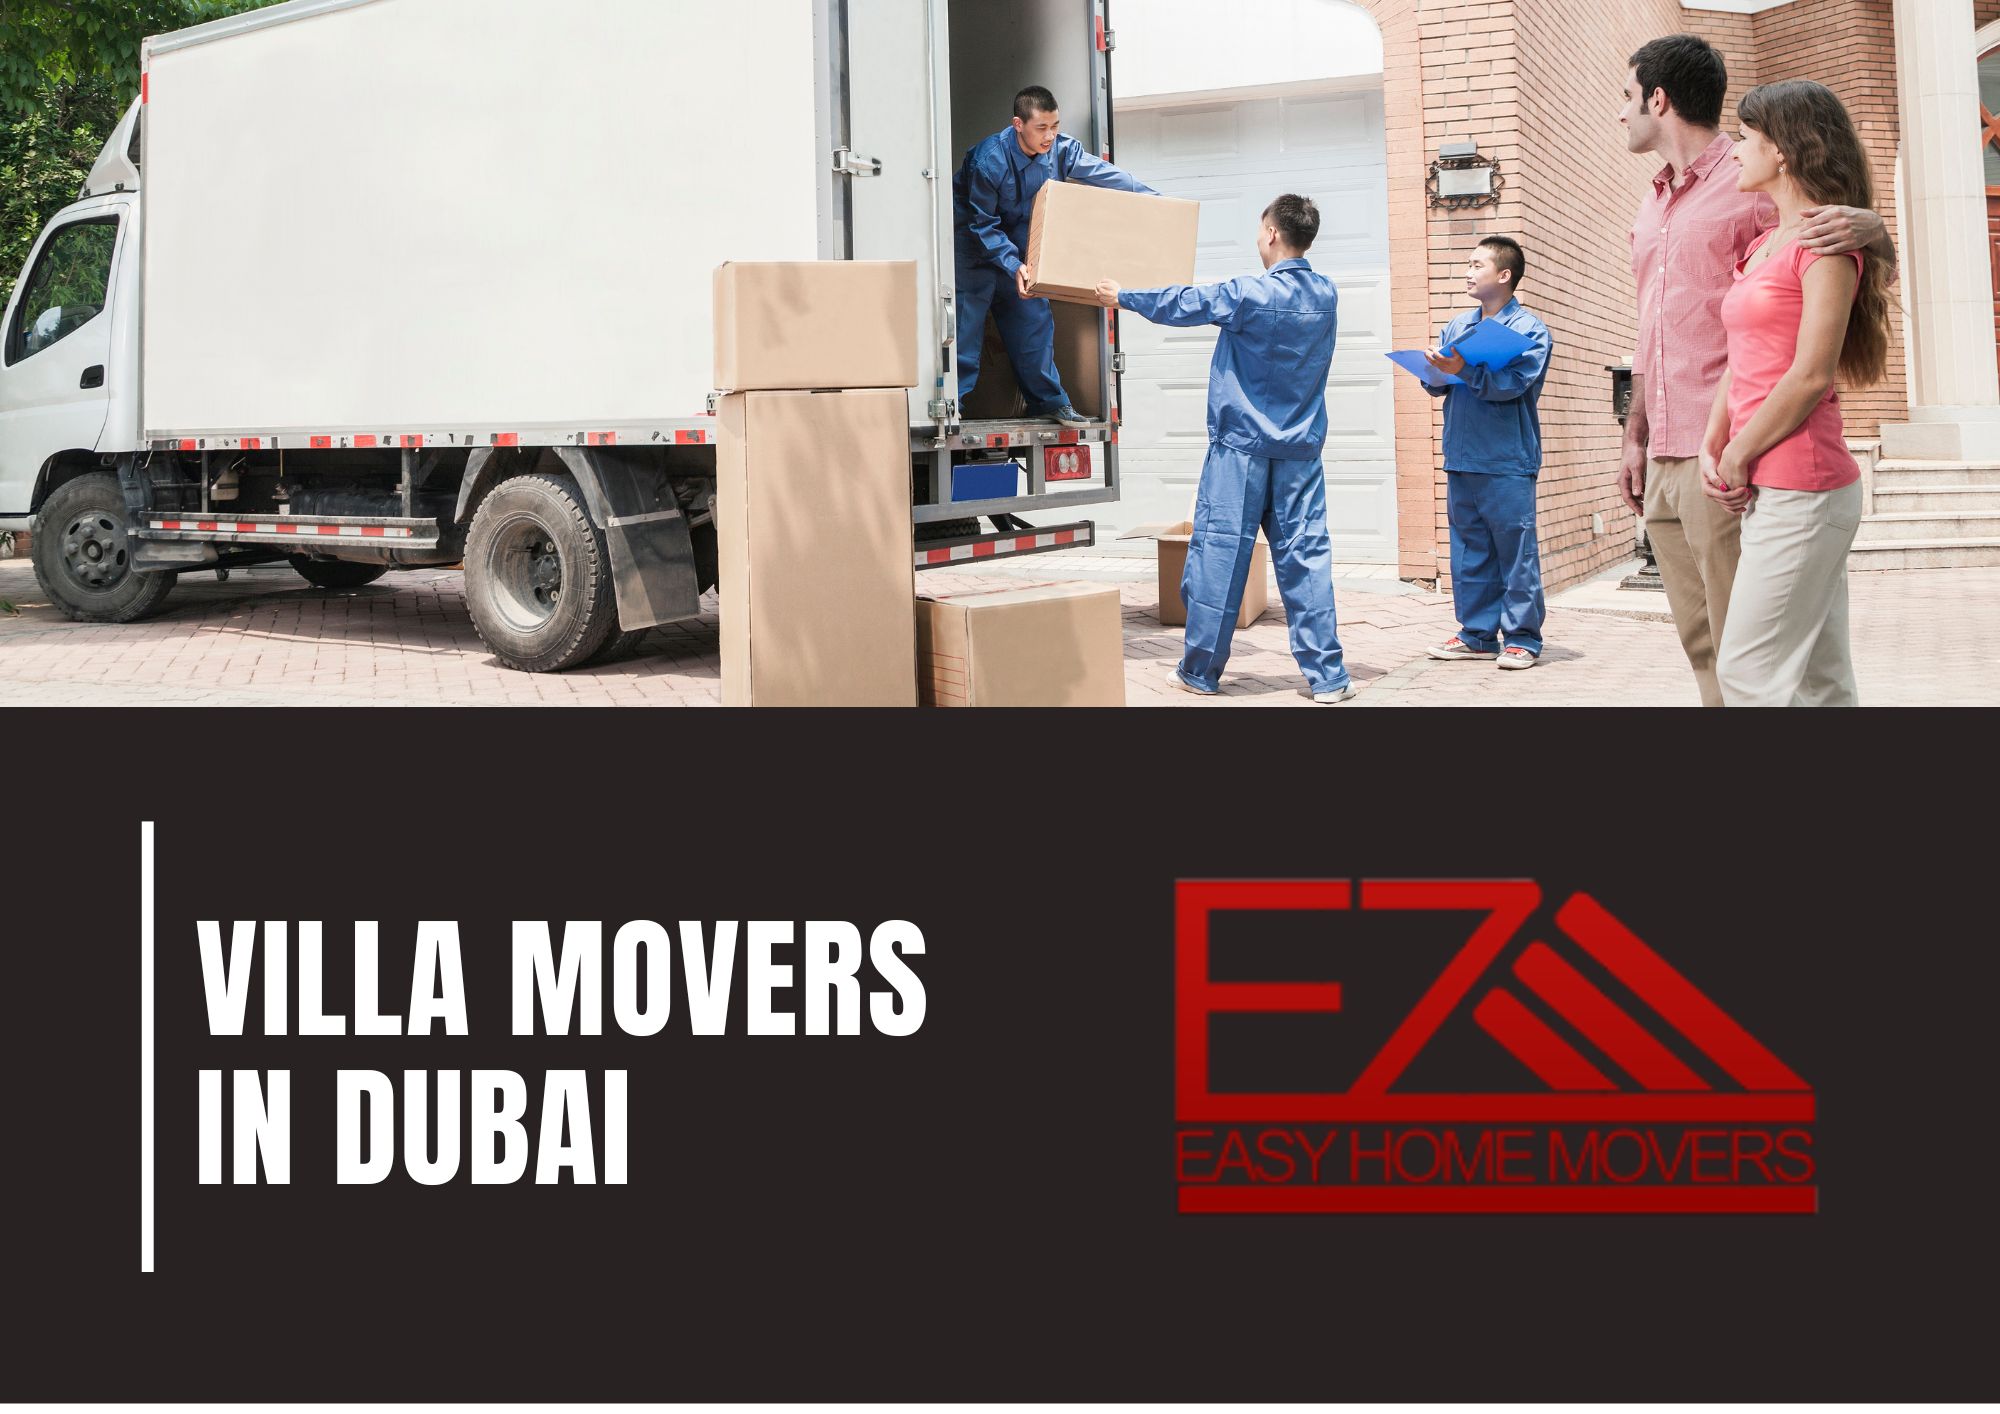 best movers in Dubai